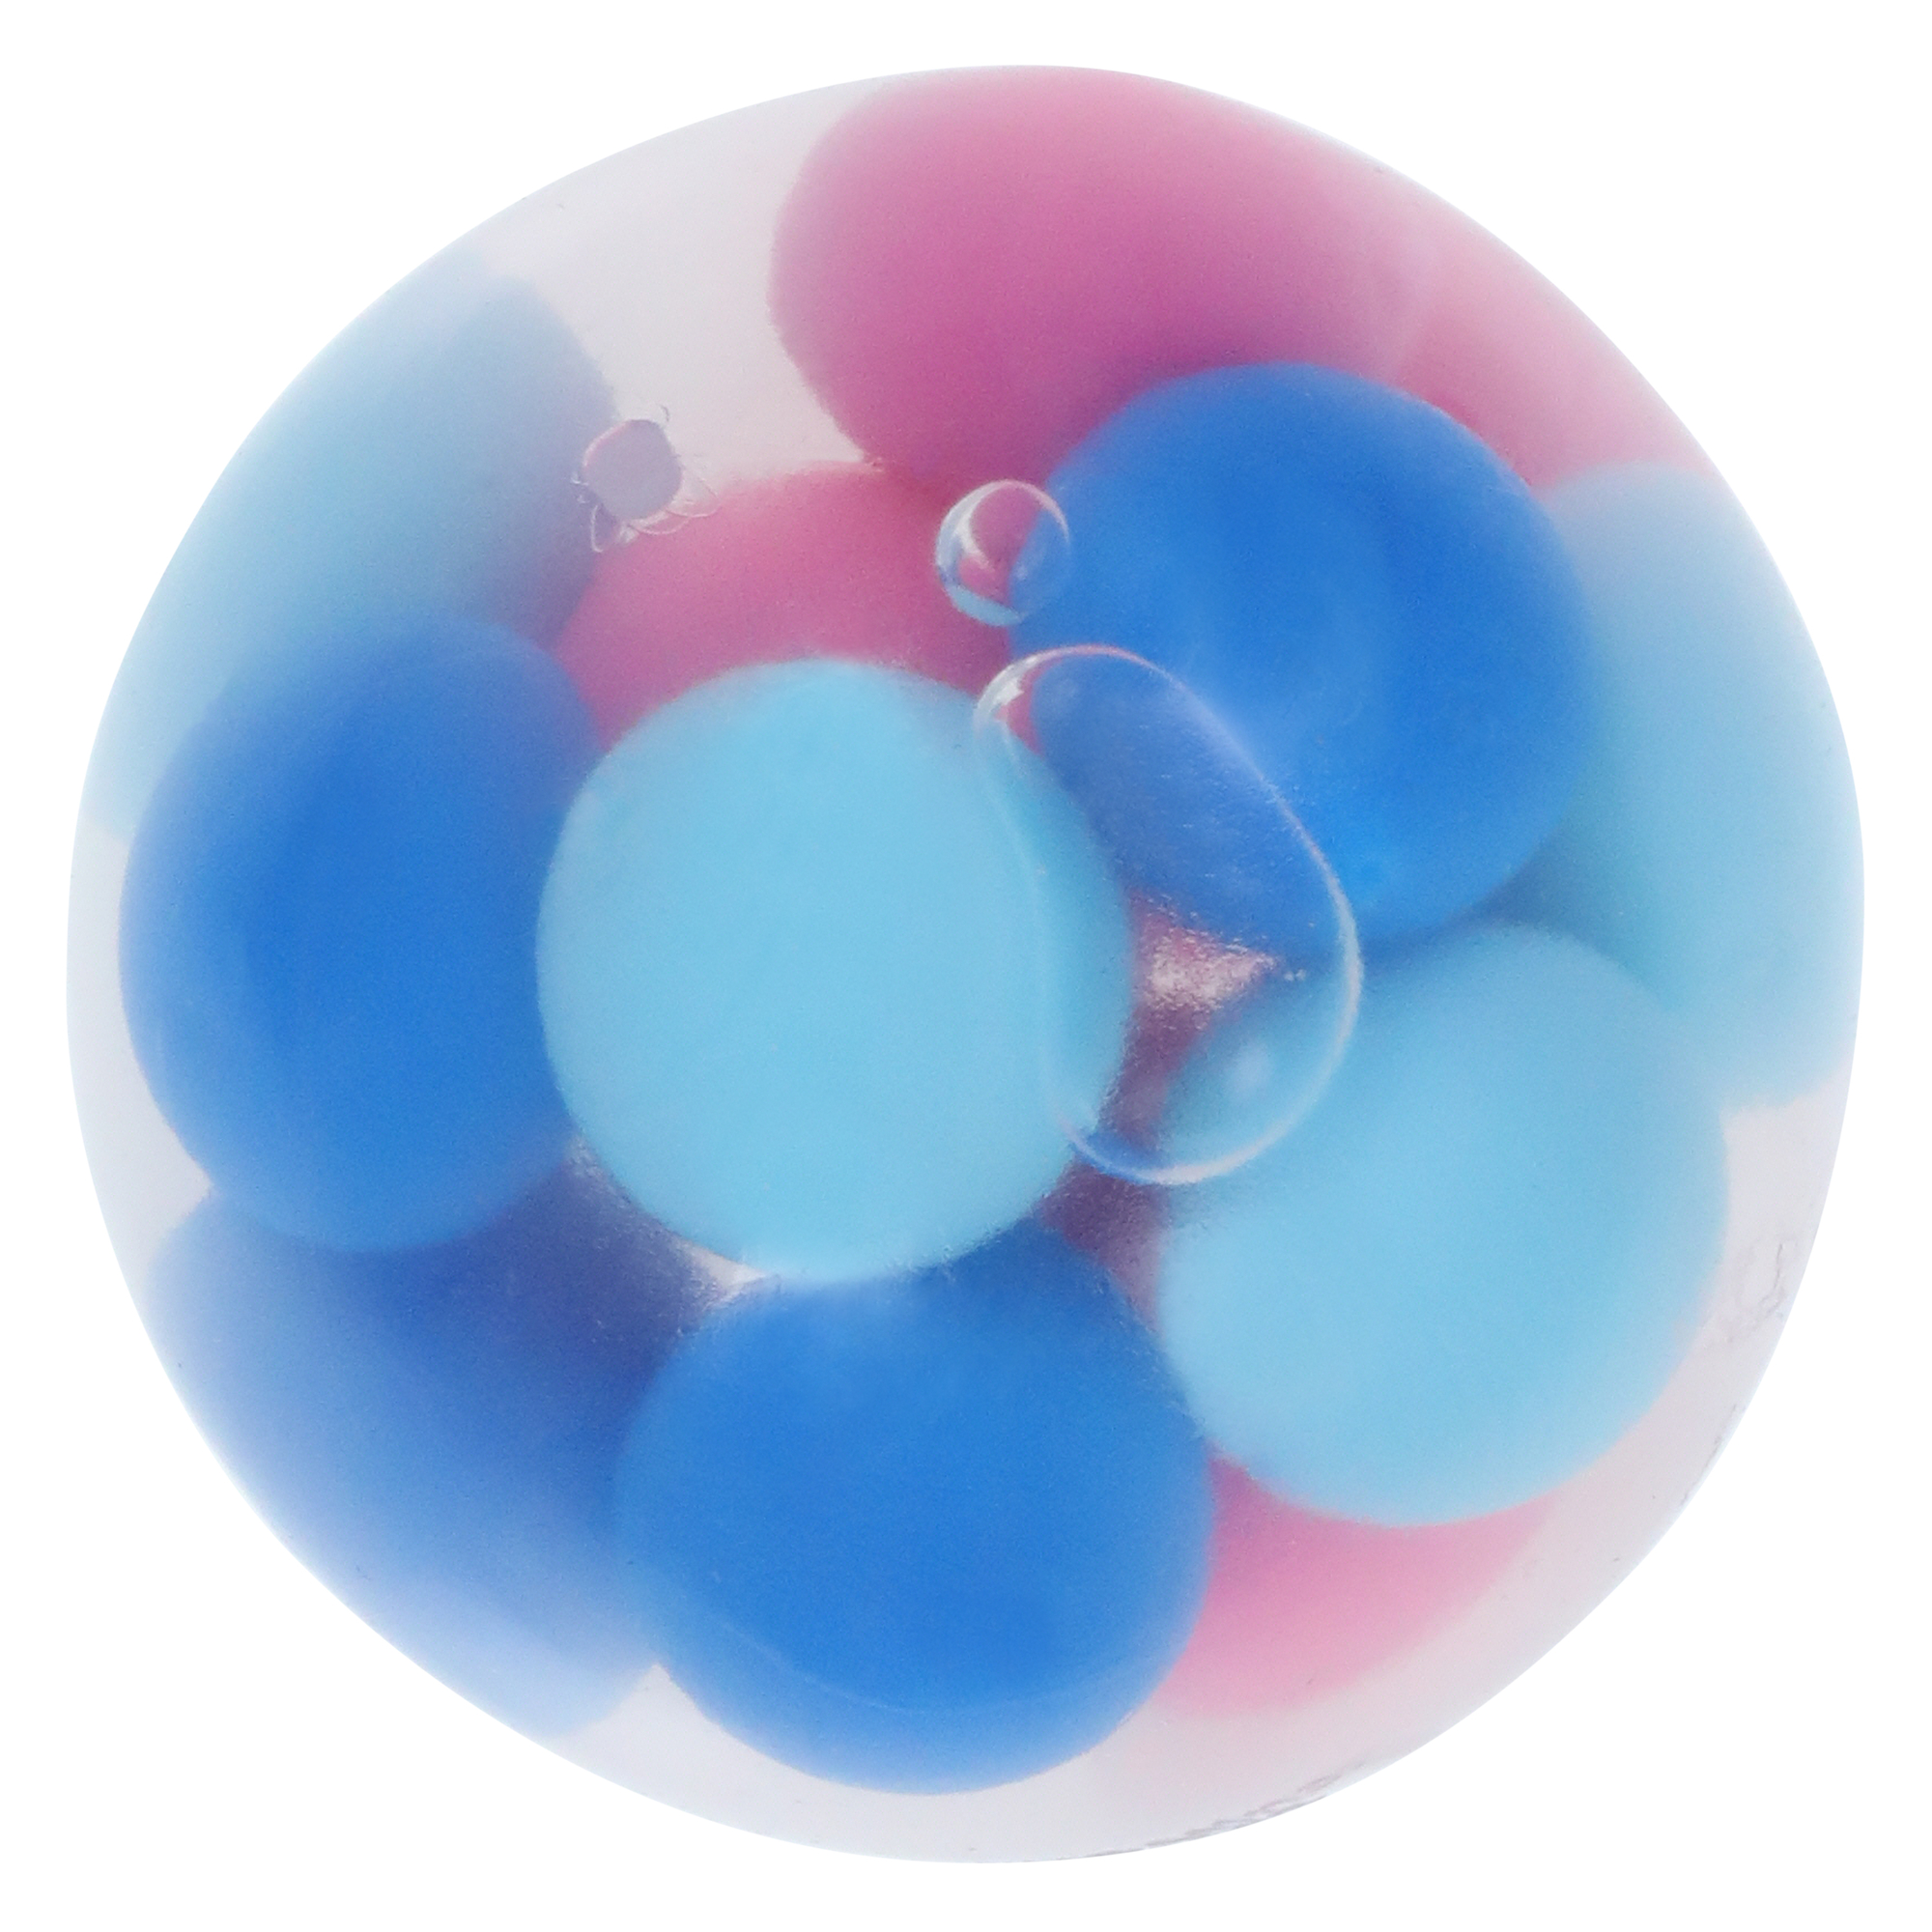 grafix® squishy ball sensory toy